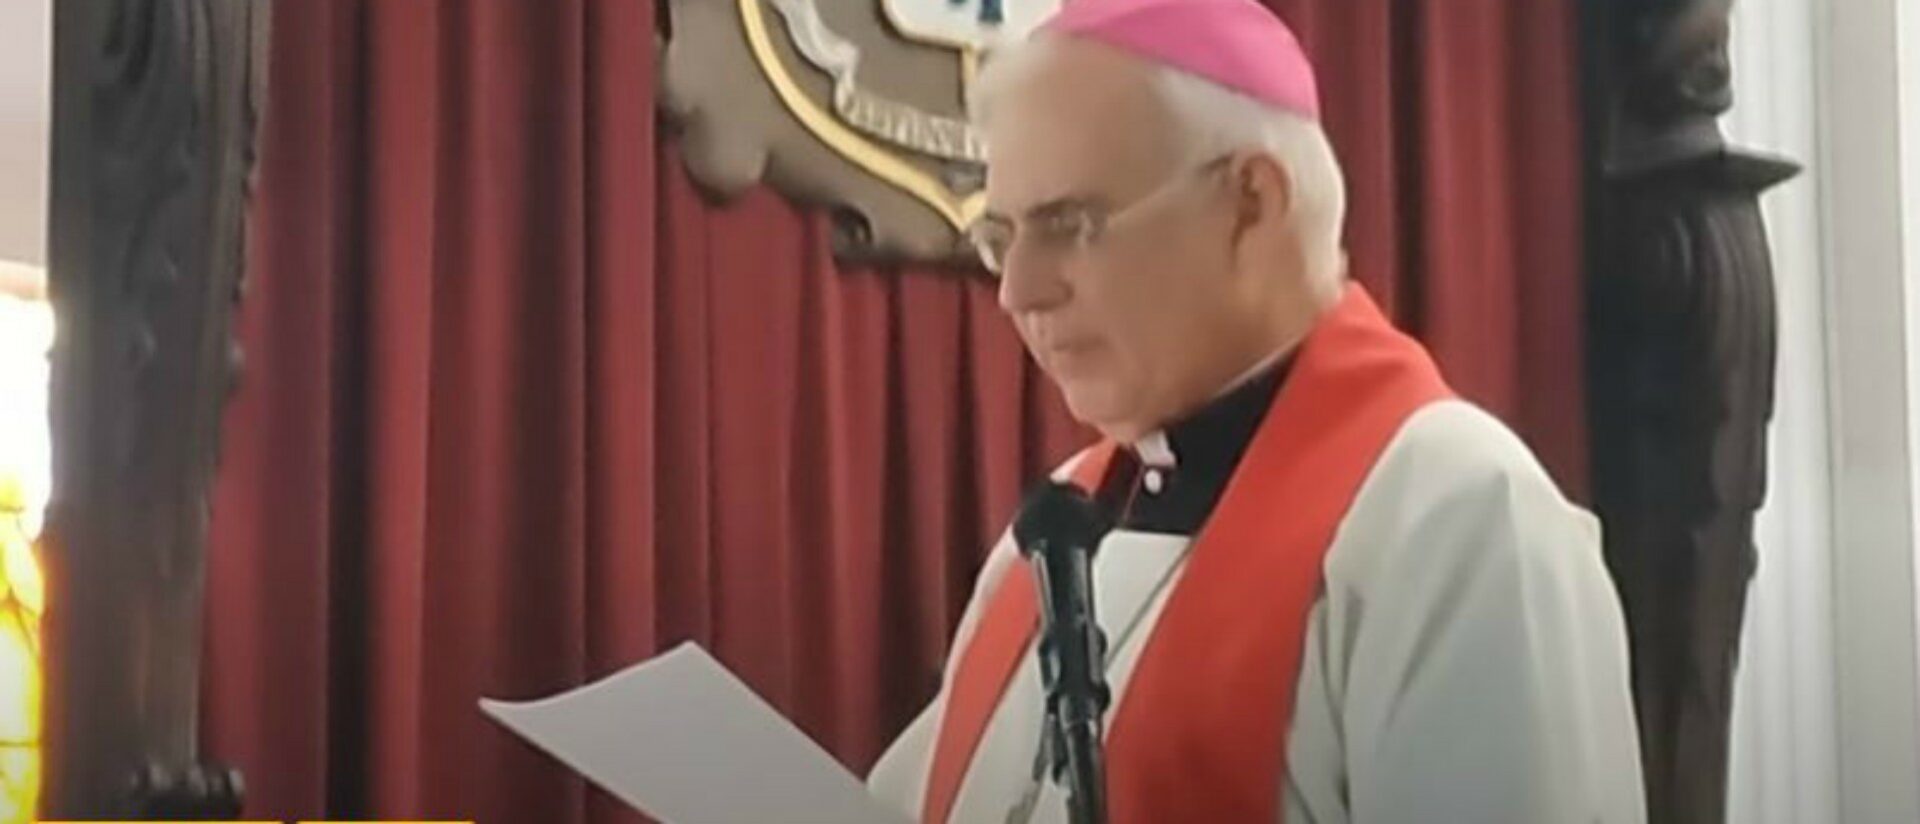 Mgr Mario Moronta, évêque de San Cristóbal, au Venezuela | diocesisdesancristobal